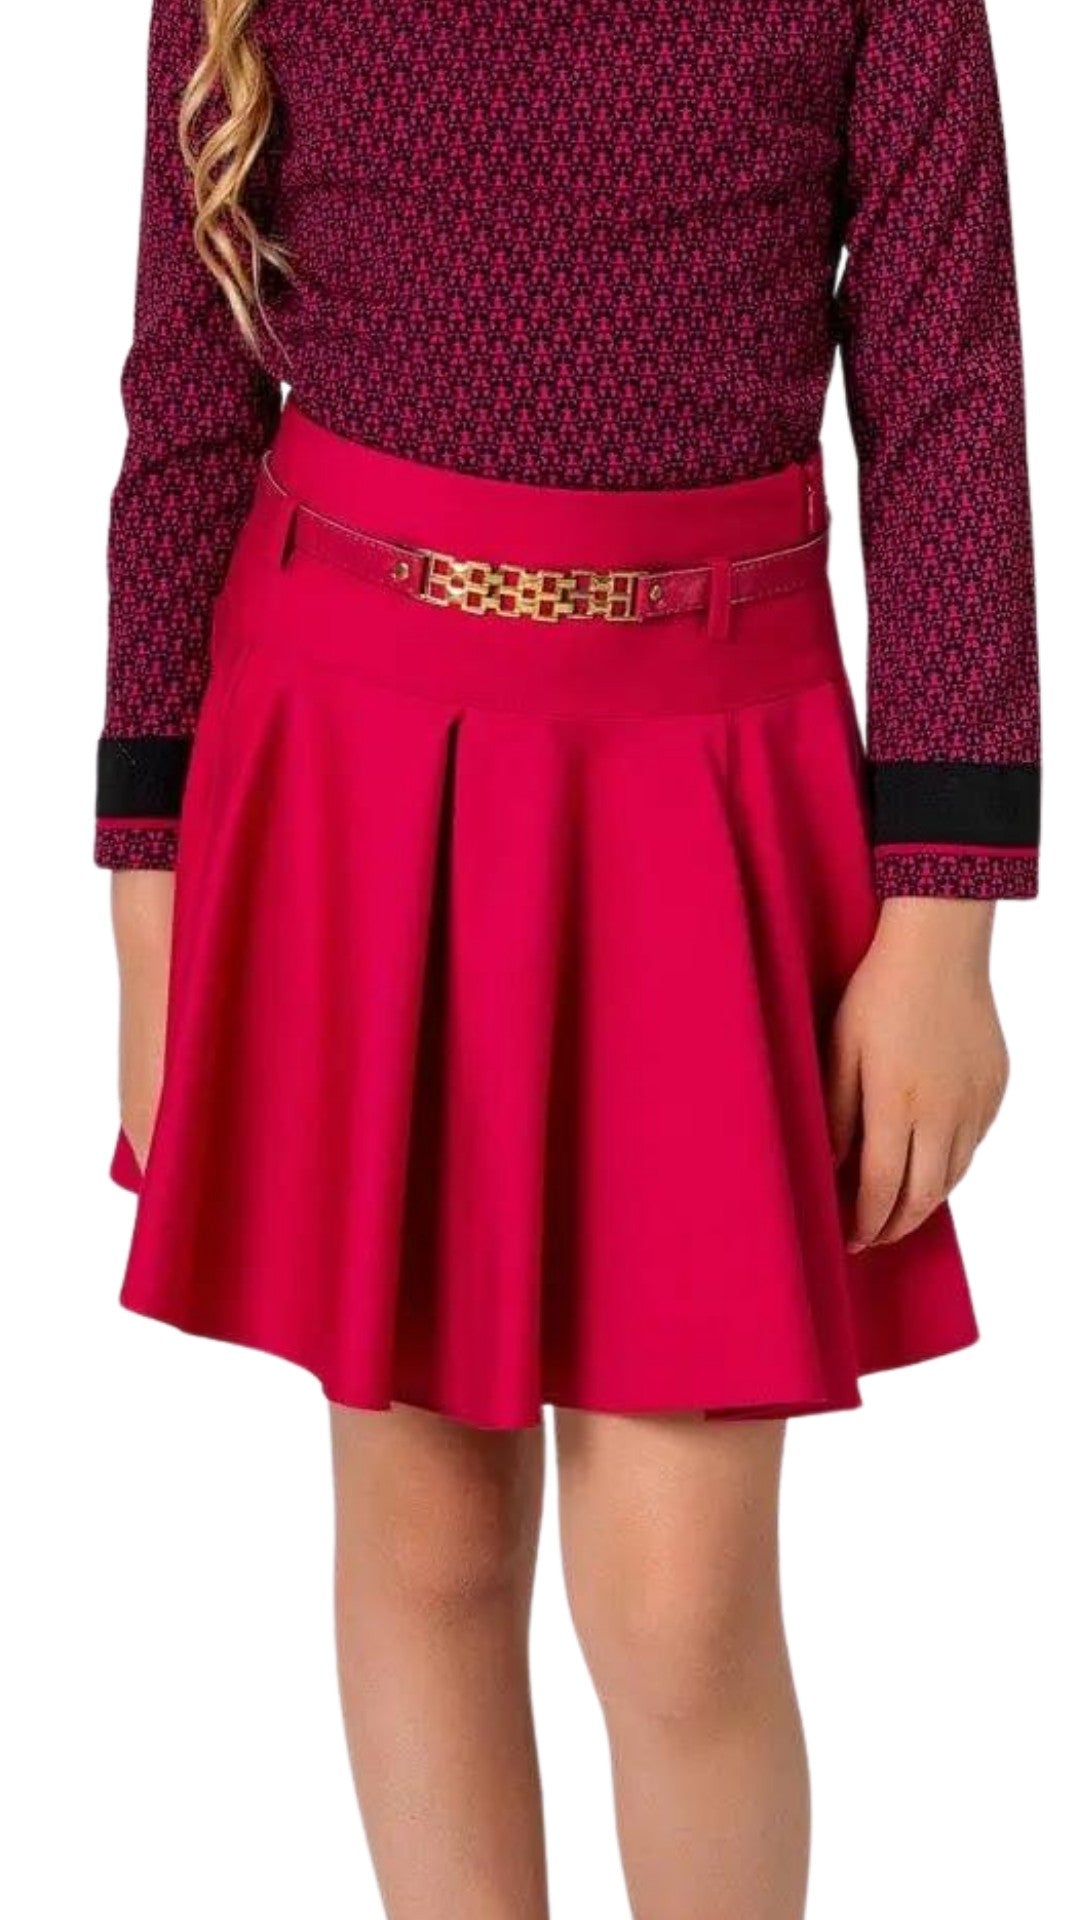 InCity Girls Tween 7-14 Years Casual Pink Purple Soft Knee-Length Comfortable Fashion Prit Dress Skirt InCity Boys & Girls